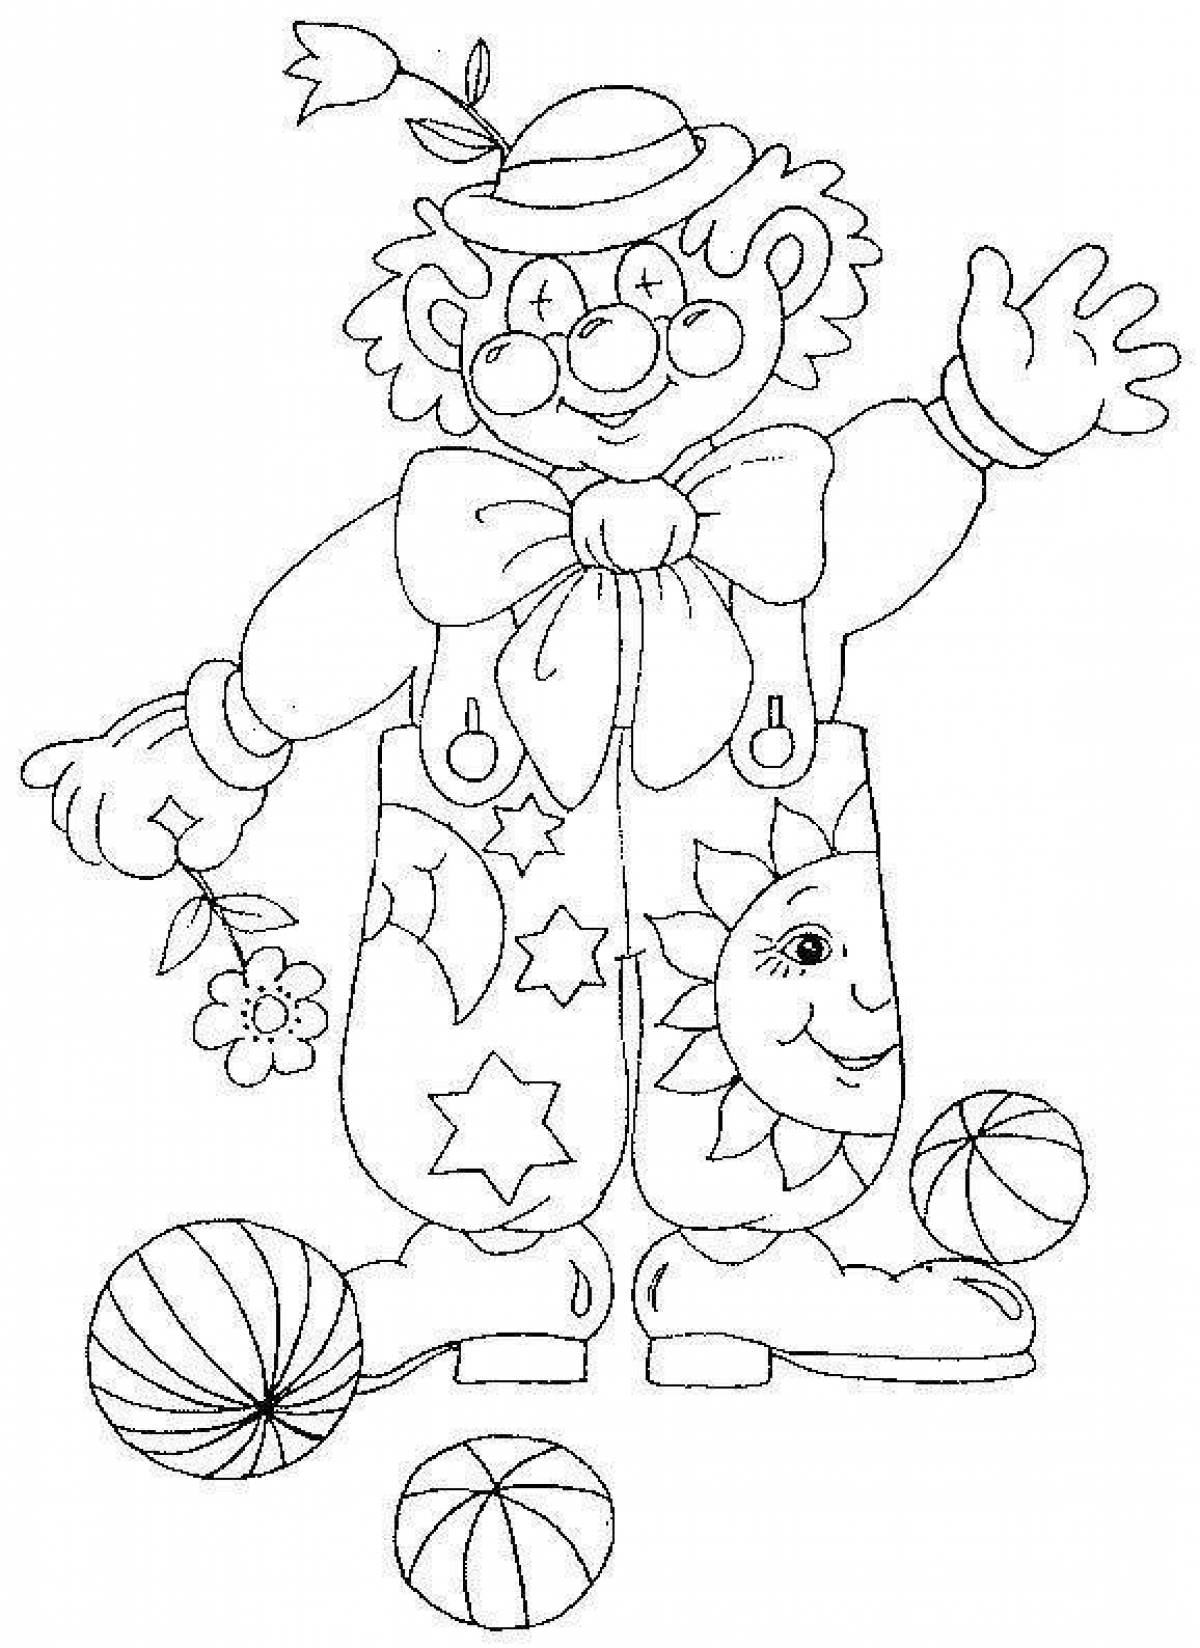 Клоун раскраска для детей 4 5 лет. Клоун раскраска. Клоун раскраска для детей. Веселый клоун раскраска. Раскраска весёлый клоун для детей.